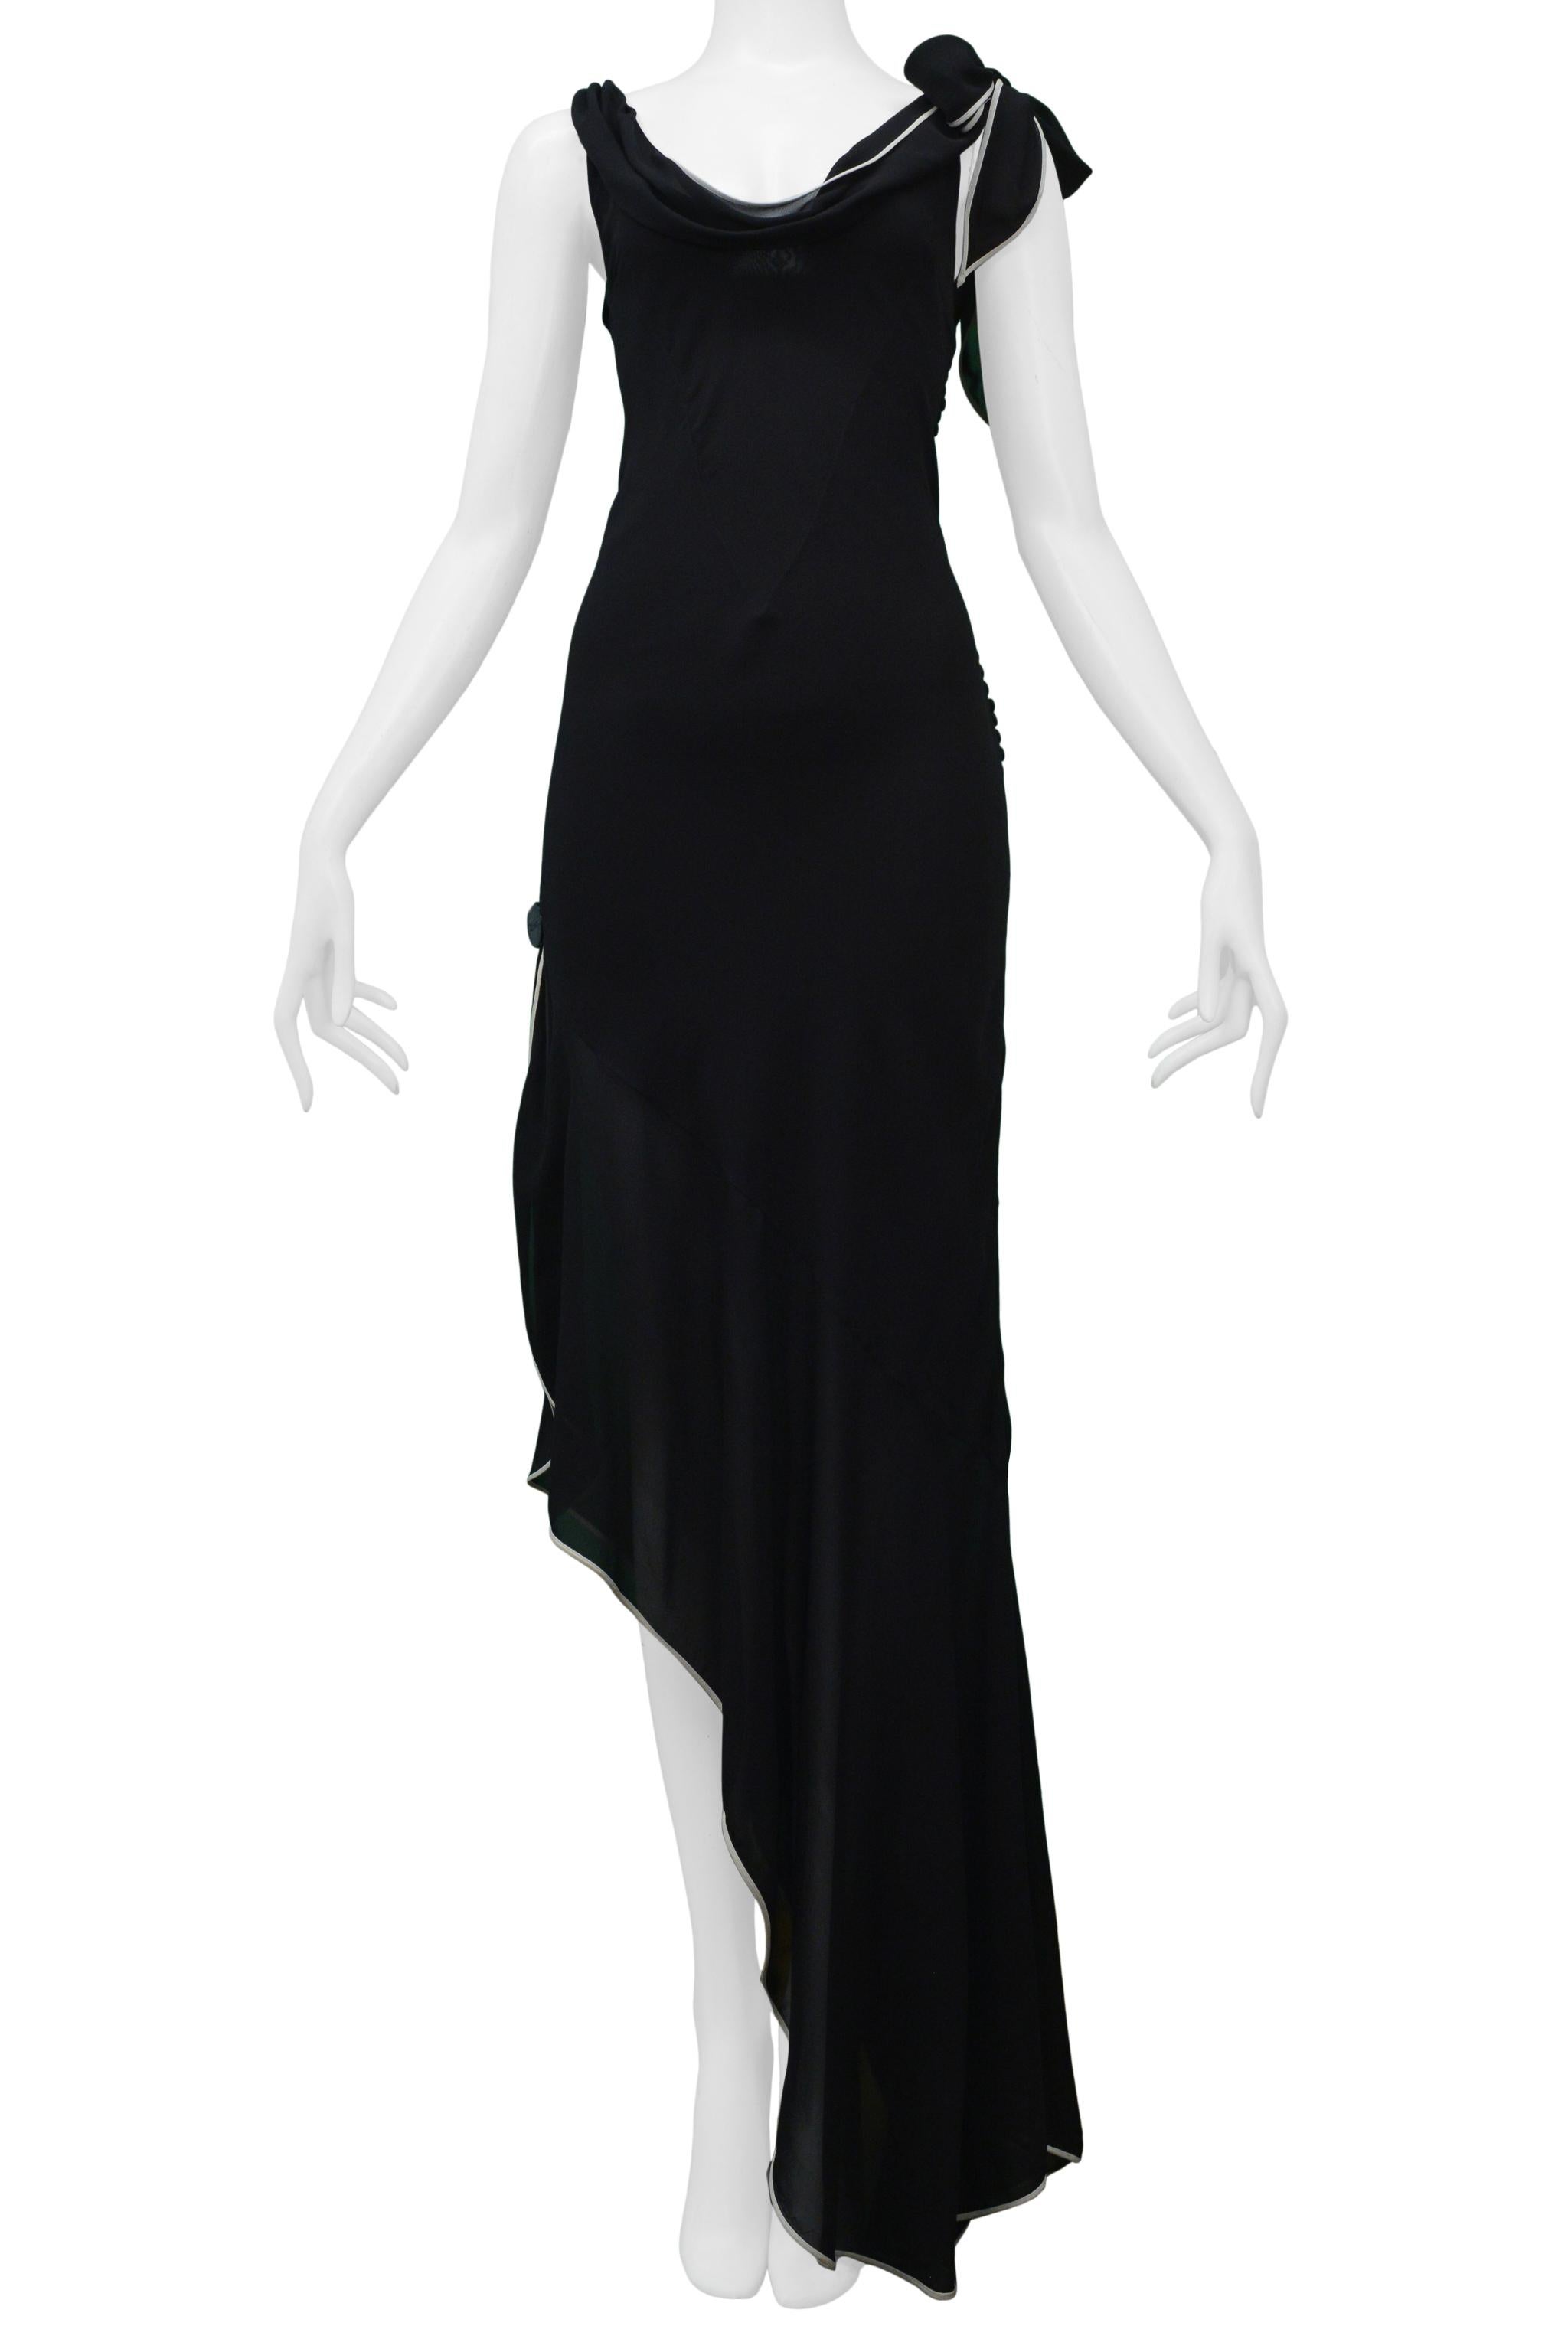 black dress with white trim